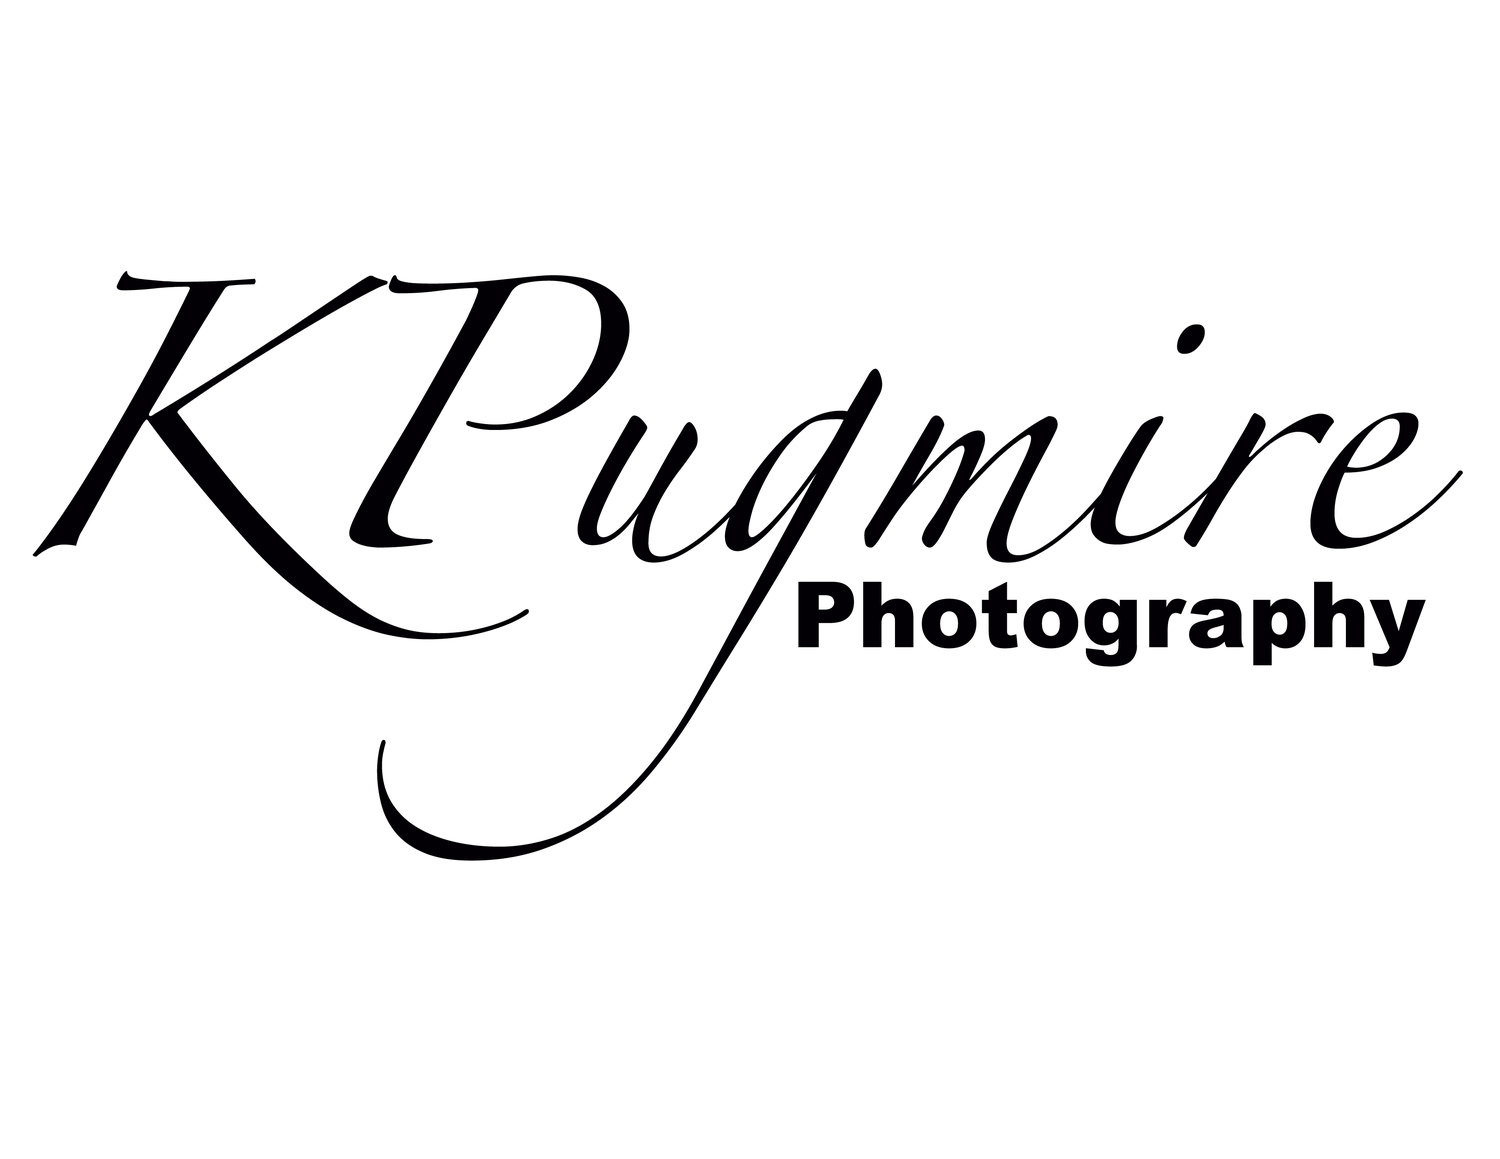 KPugmire Photography